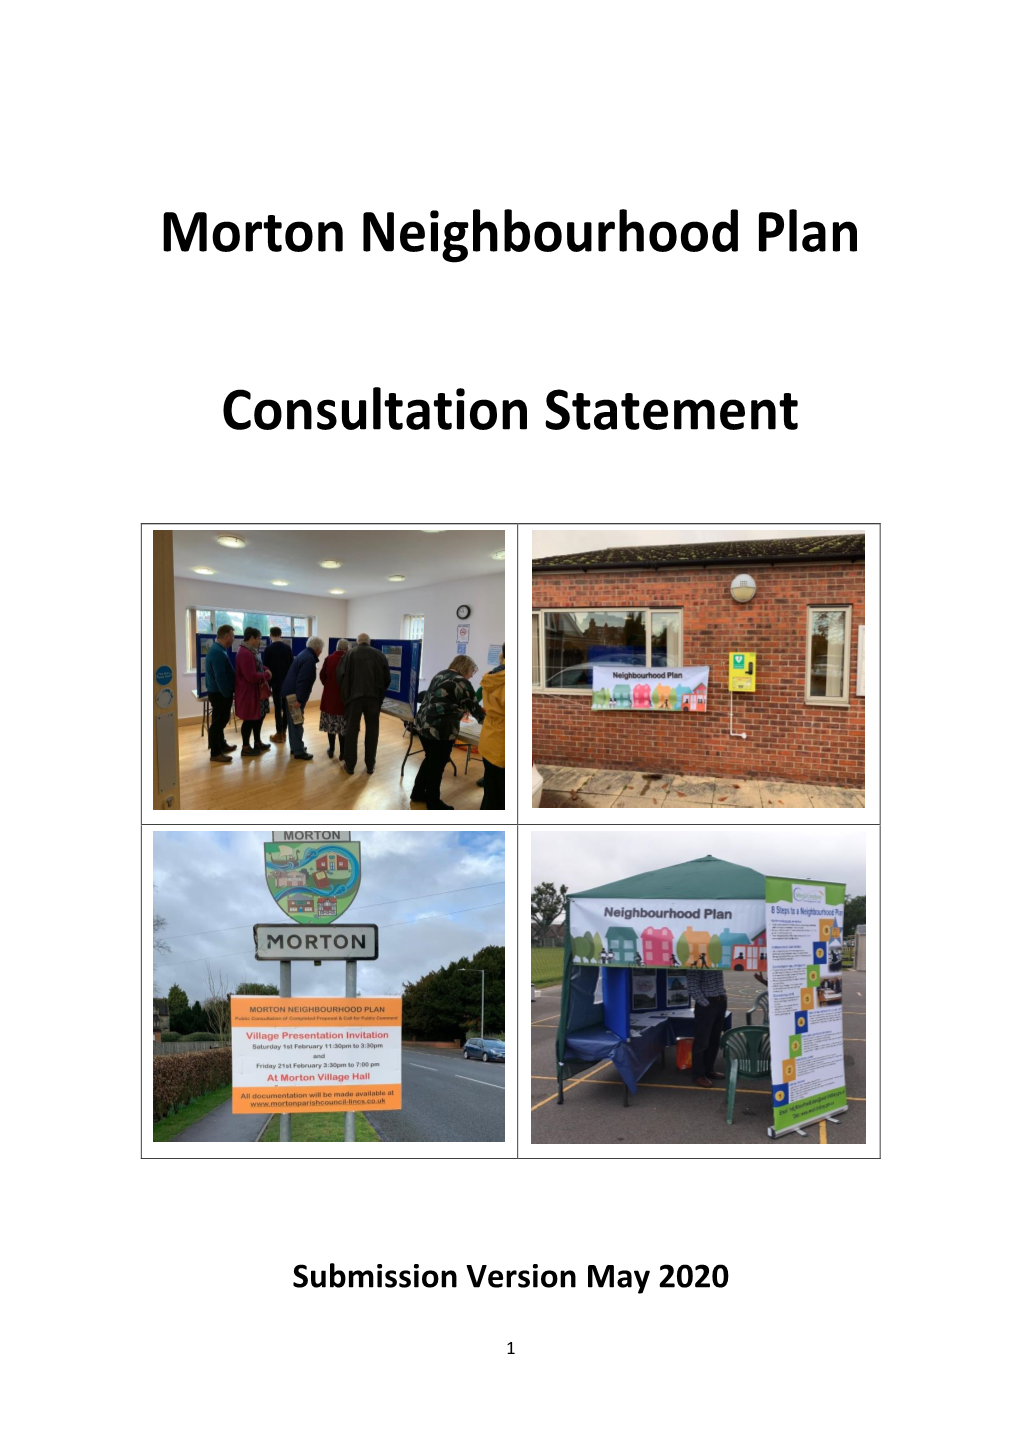 Morton Neighbourhood Plan Consultation Statement